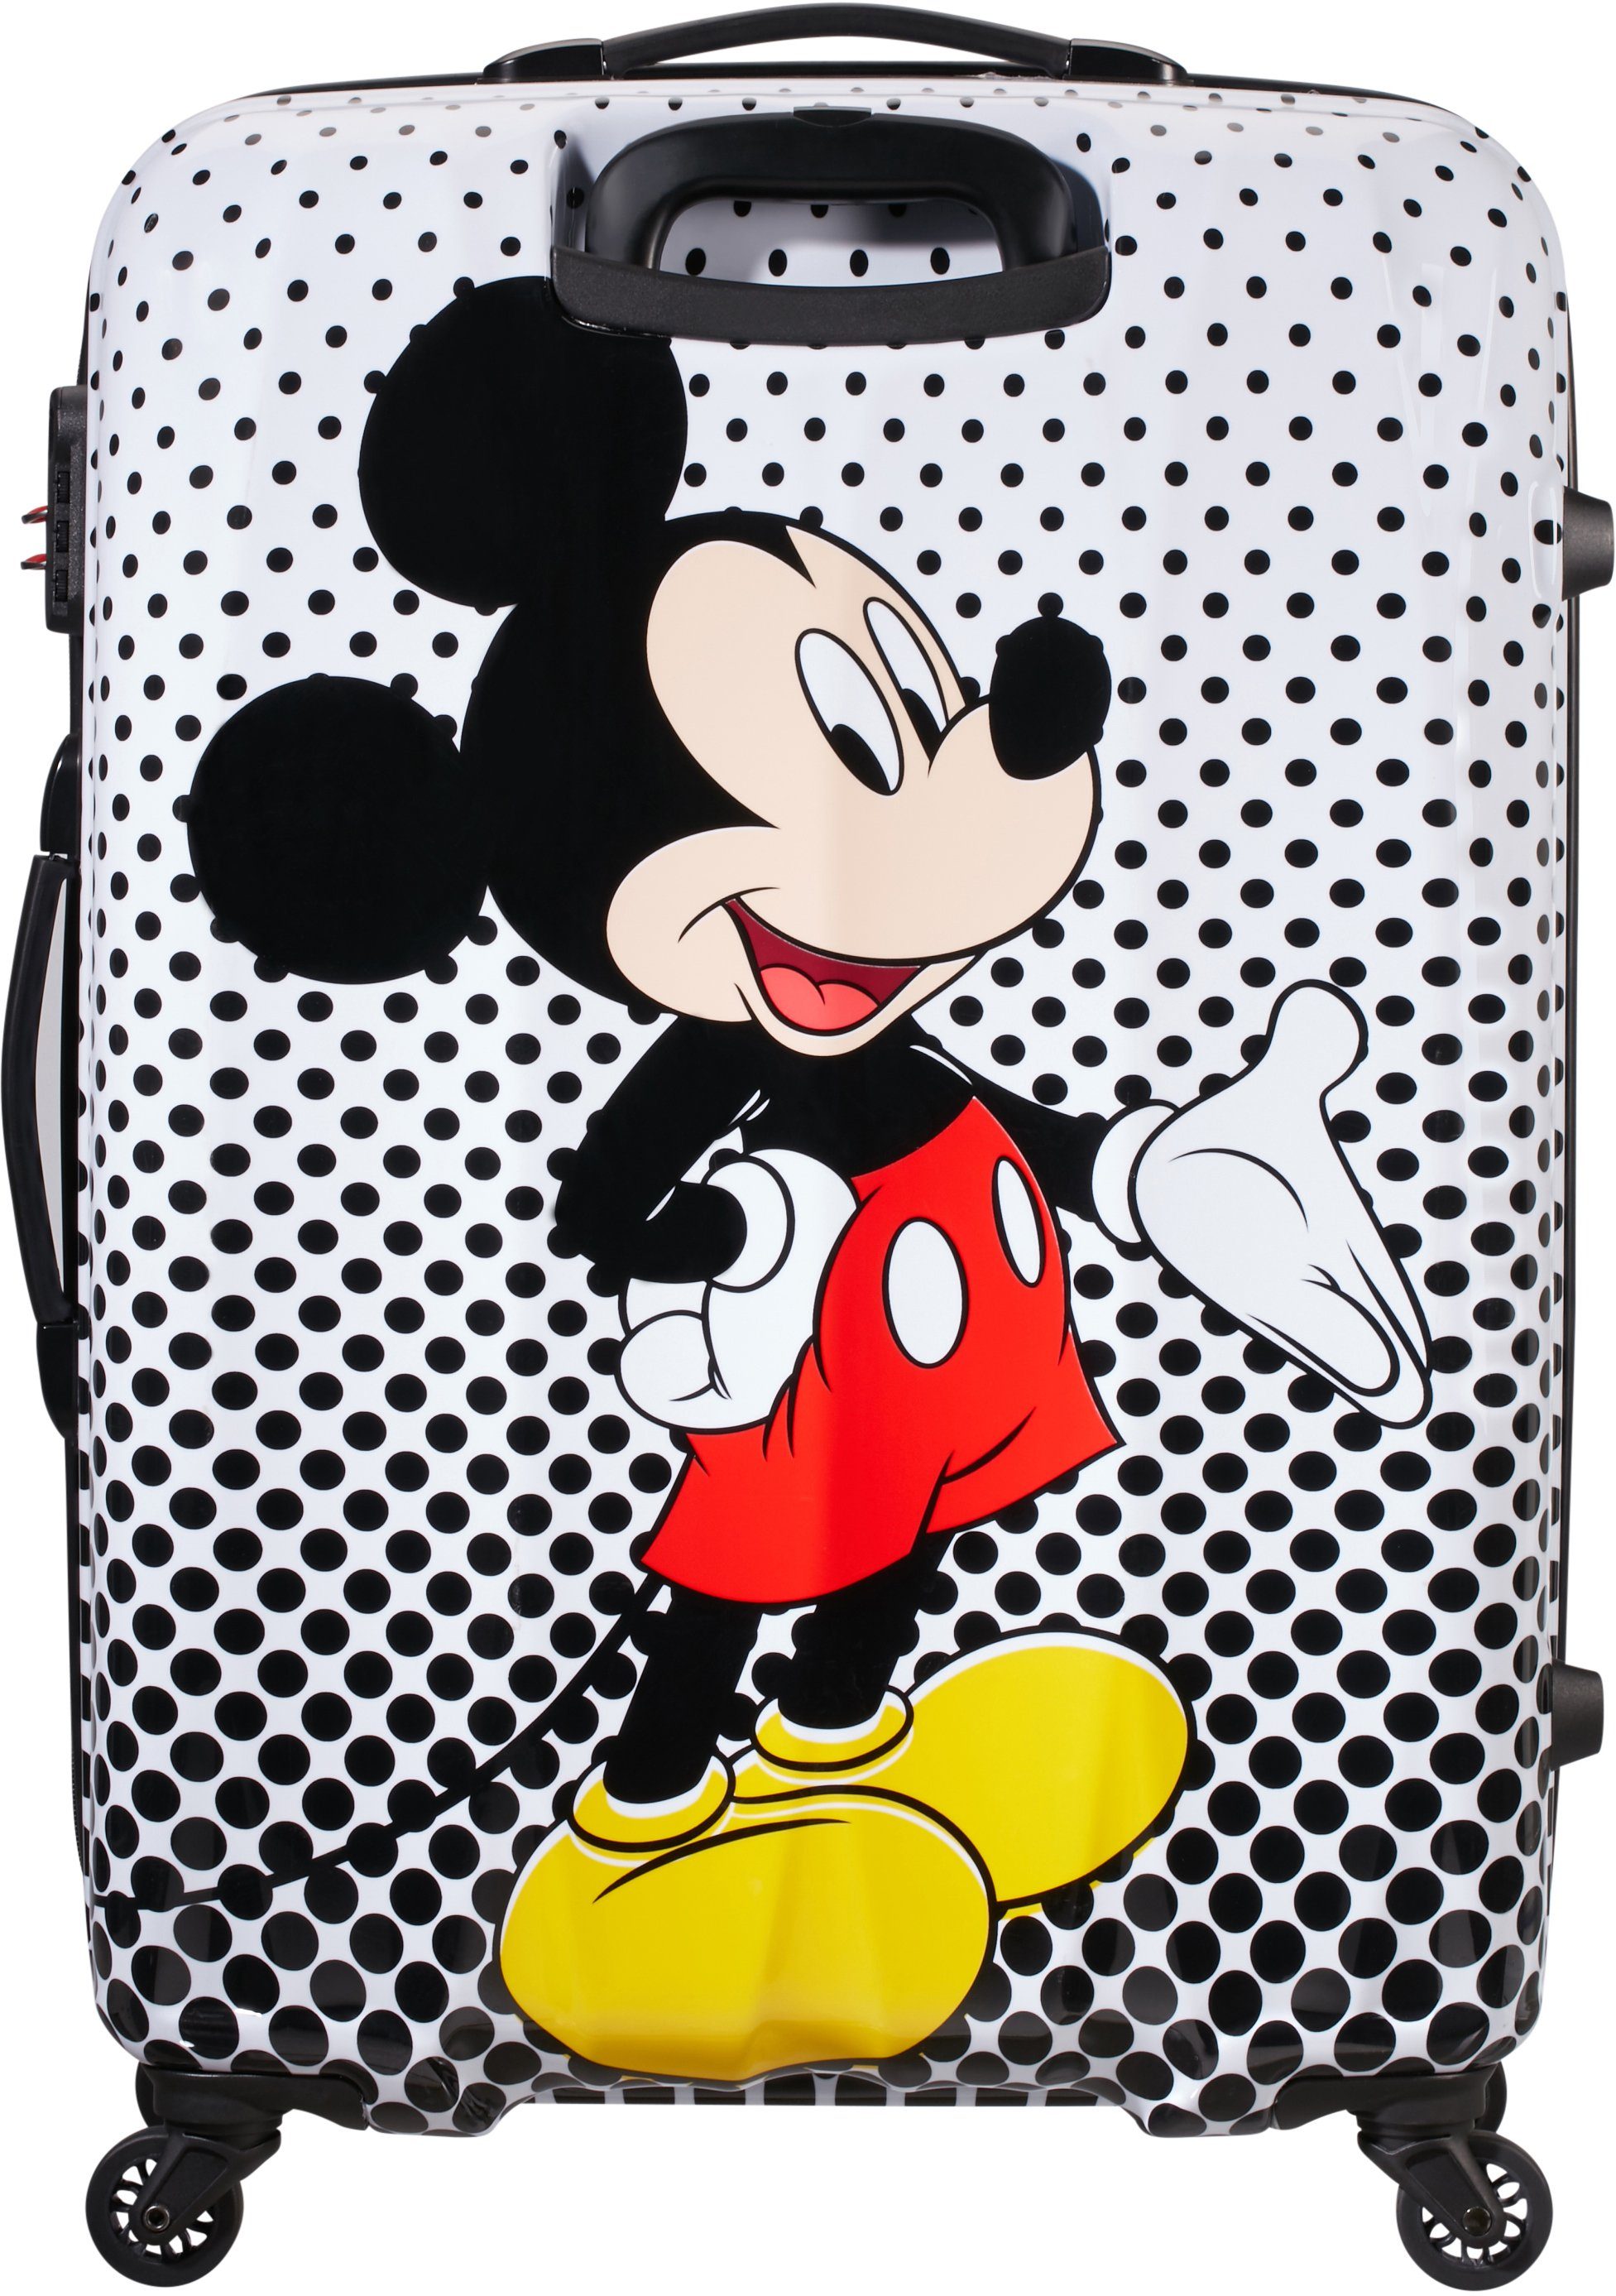 American Tourister® Hartschalen-Trolley Mouse Mickey Rollen 4 cm, Legends, 75 Polka Disney Dots